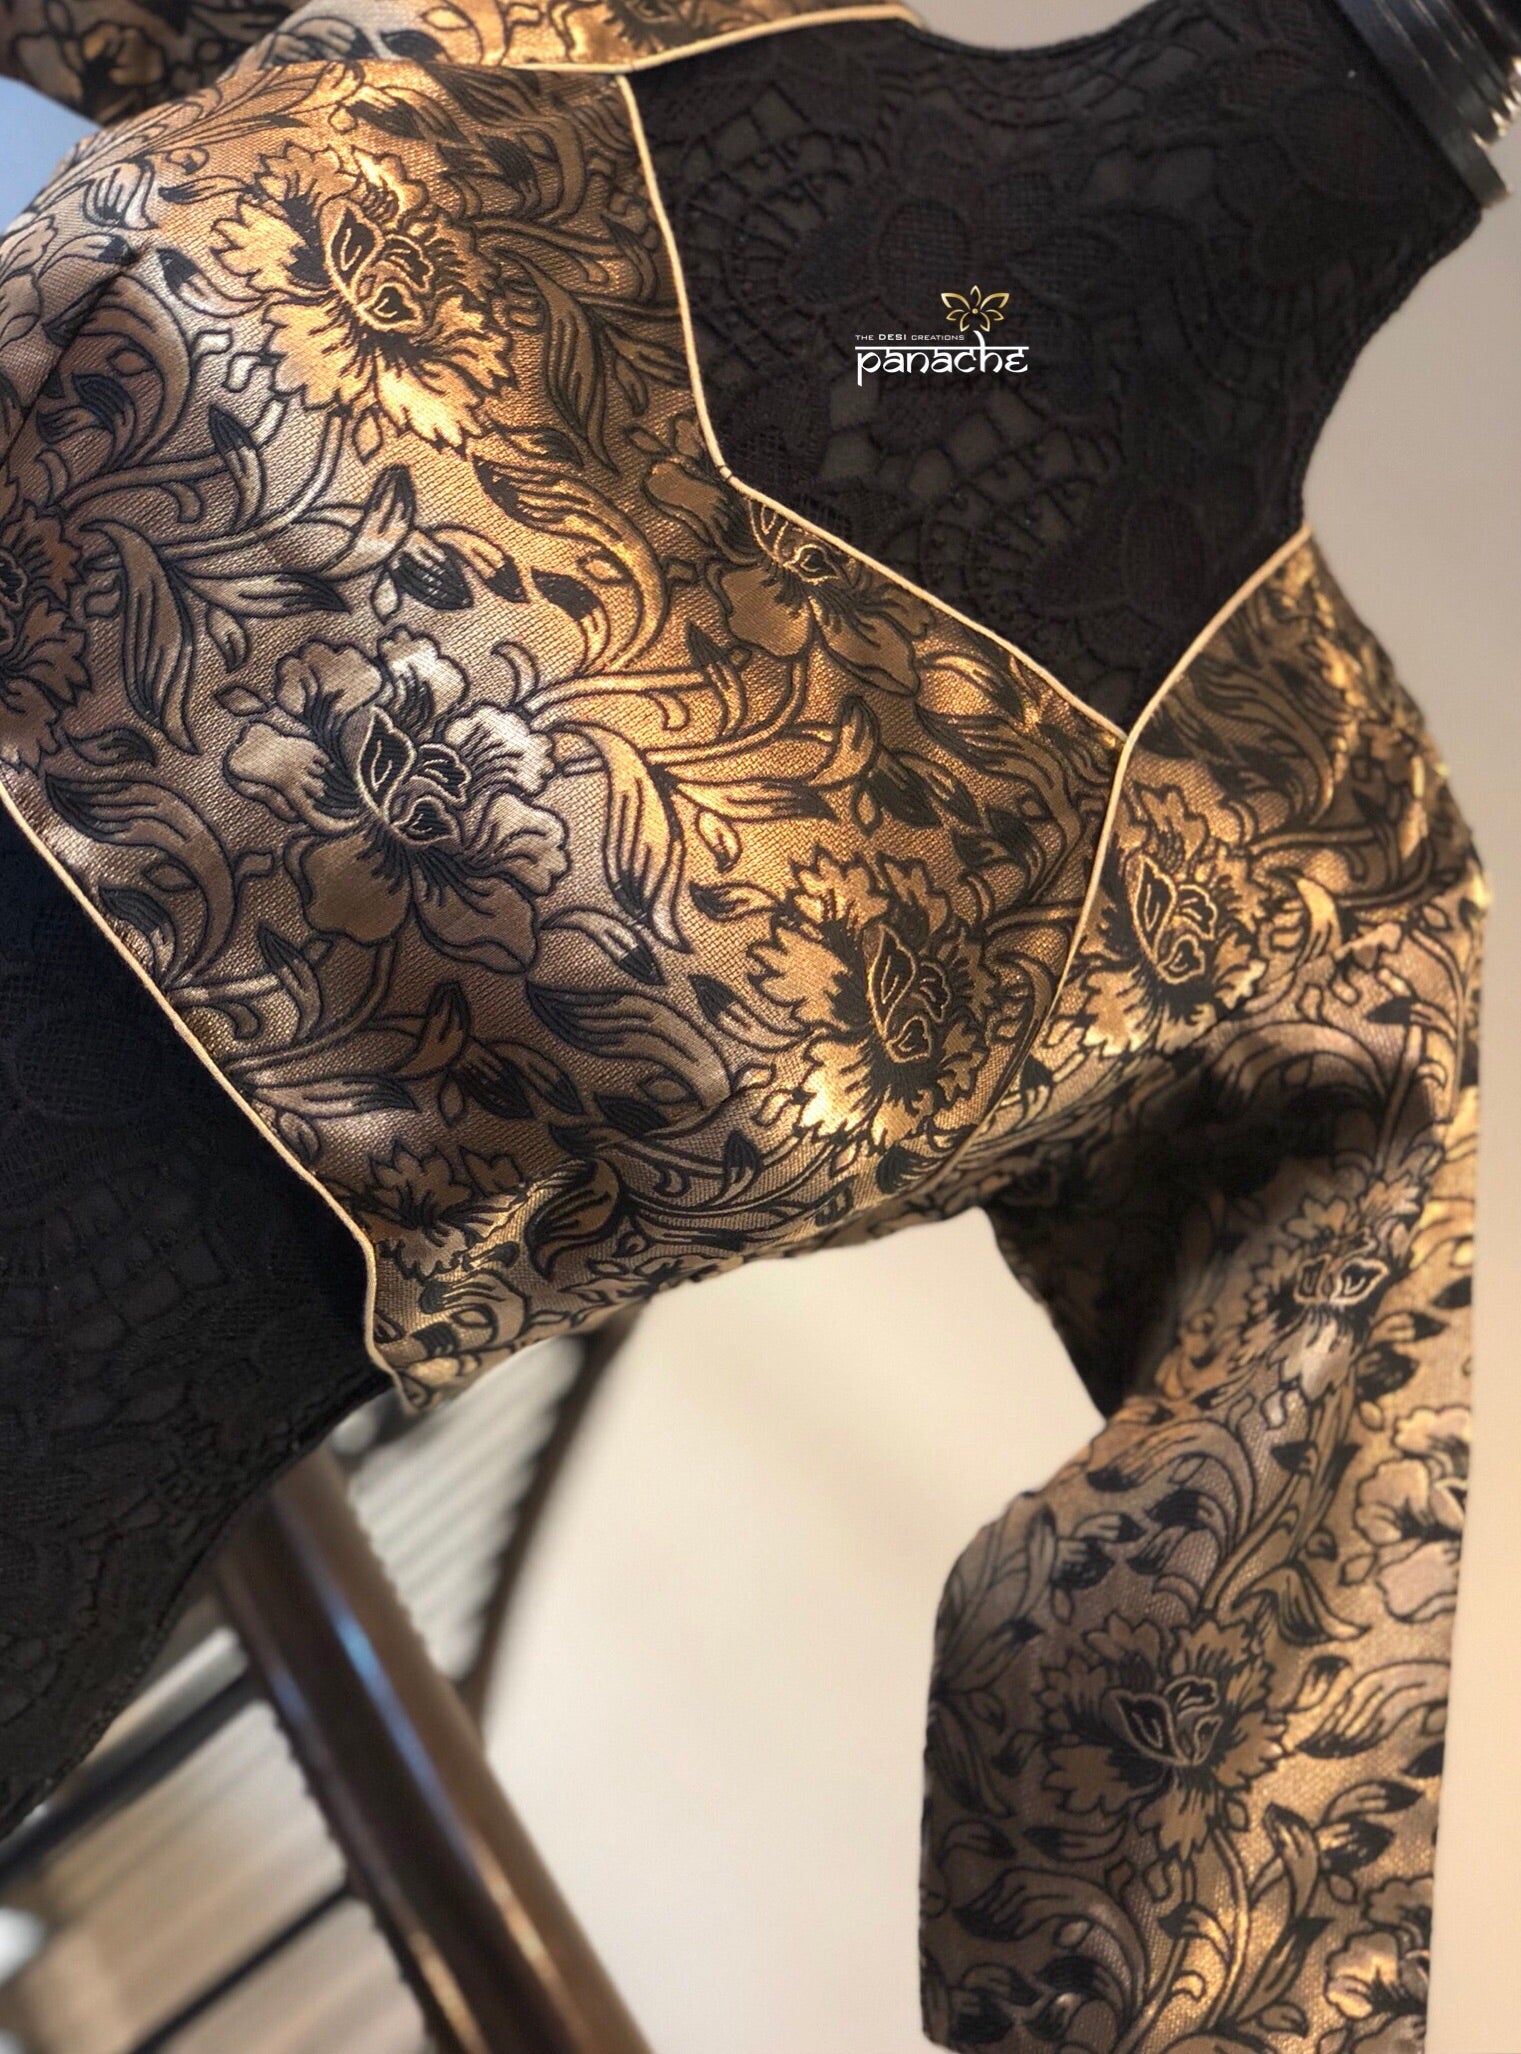 VIRINCHI CREATIONS a designer Store - Umbrella Sleeves Designer Blouse  Available for sale@Virinchi Creations a Designer Store # Contact  :9703165371#